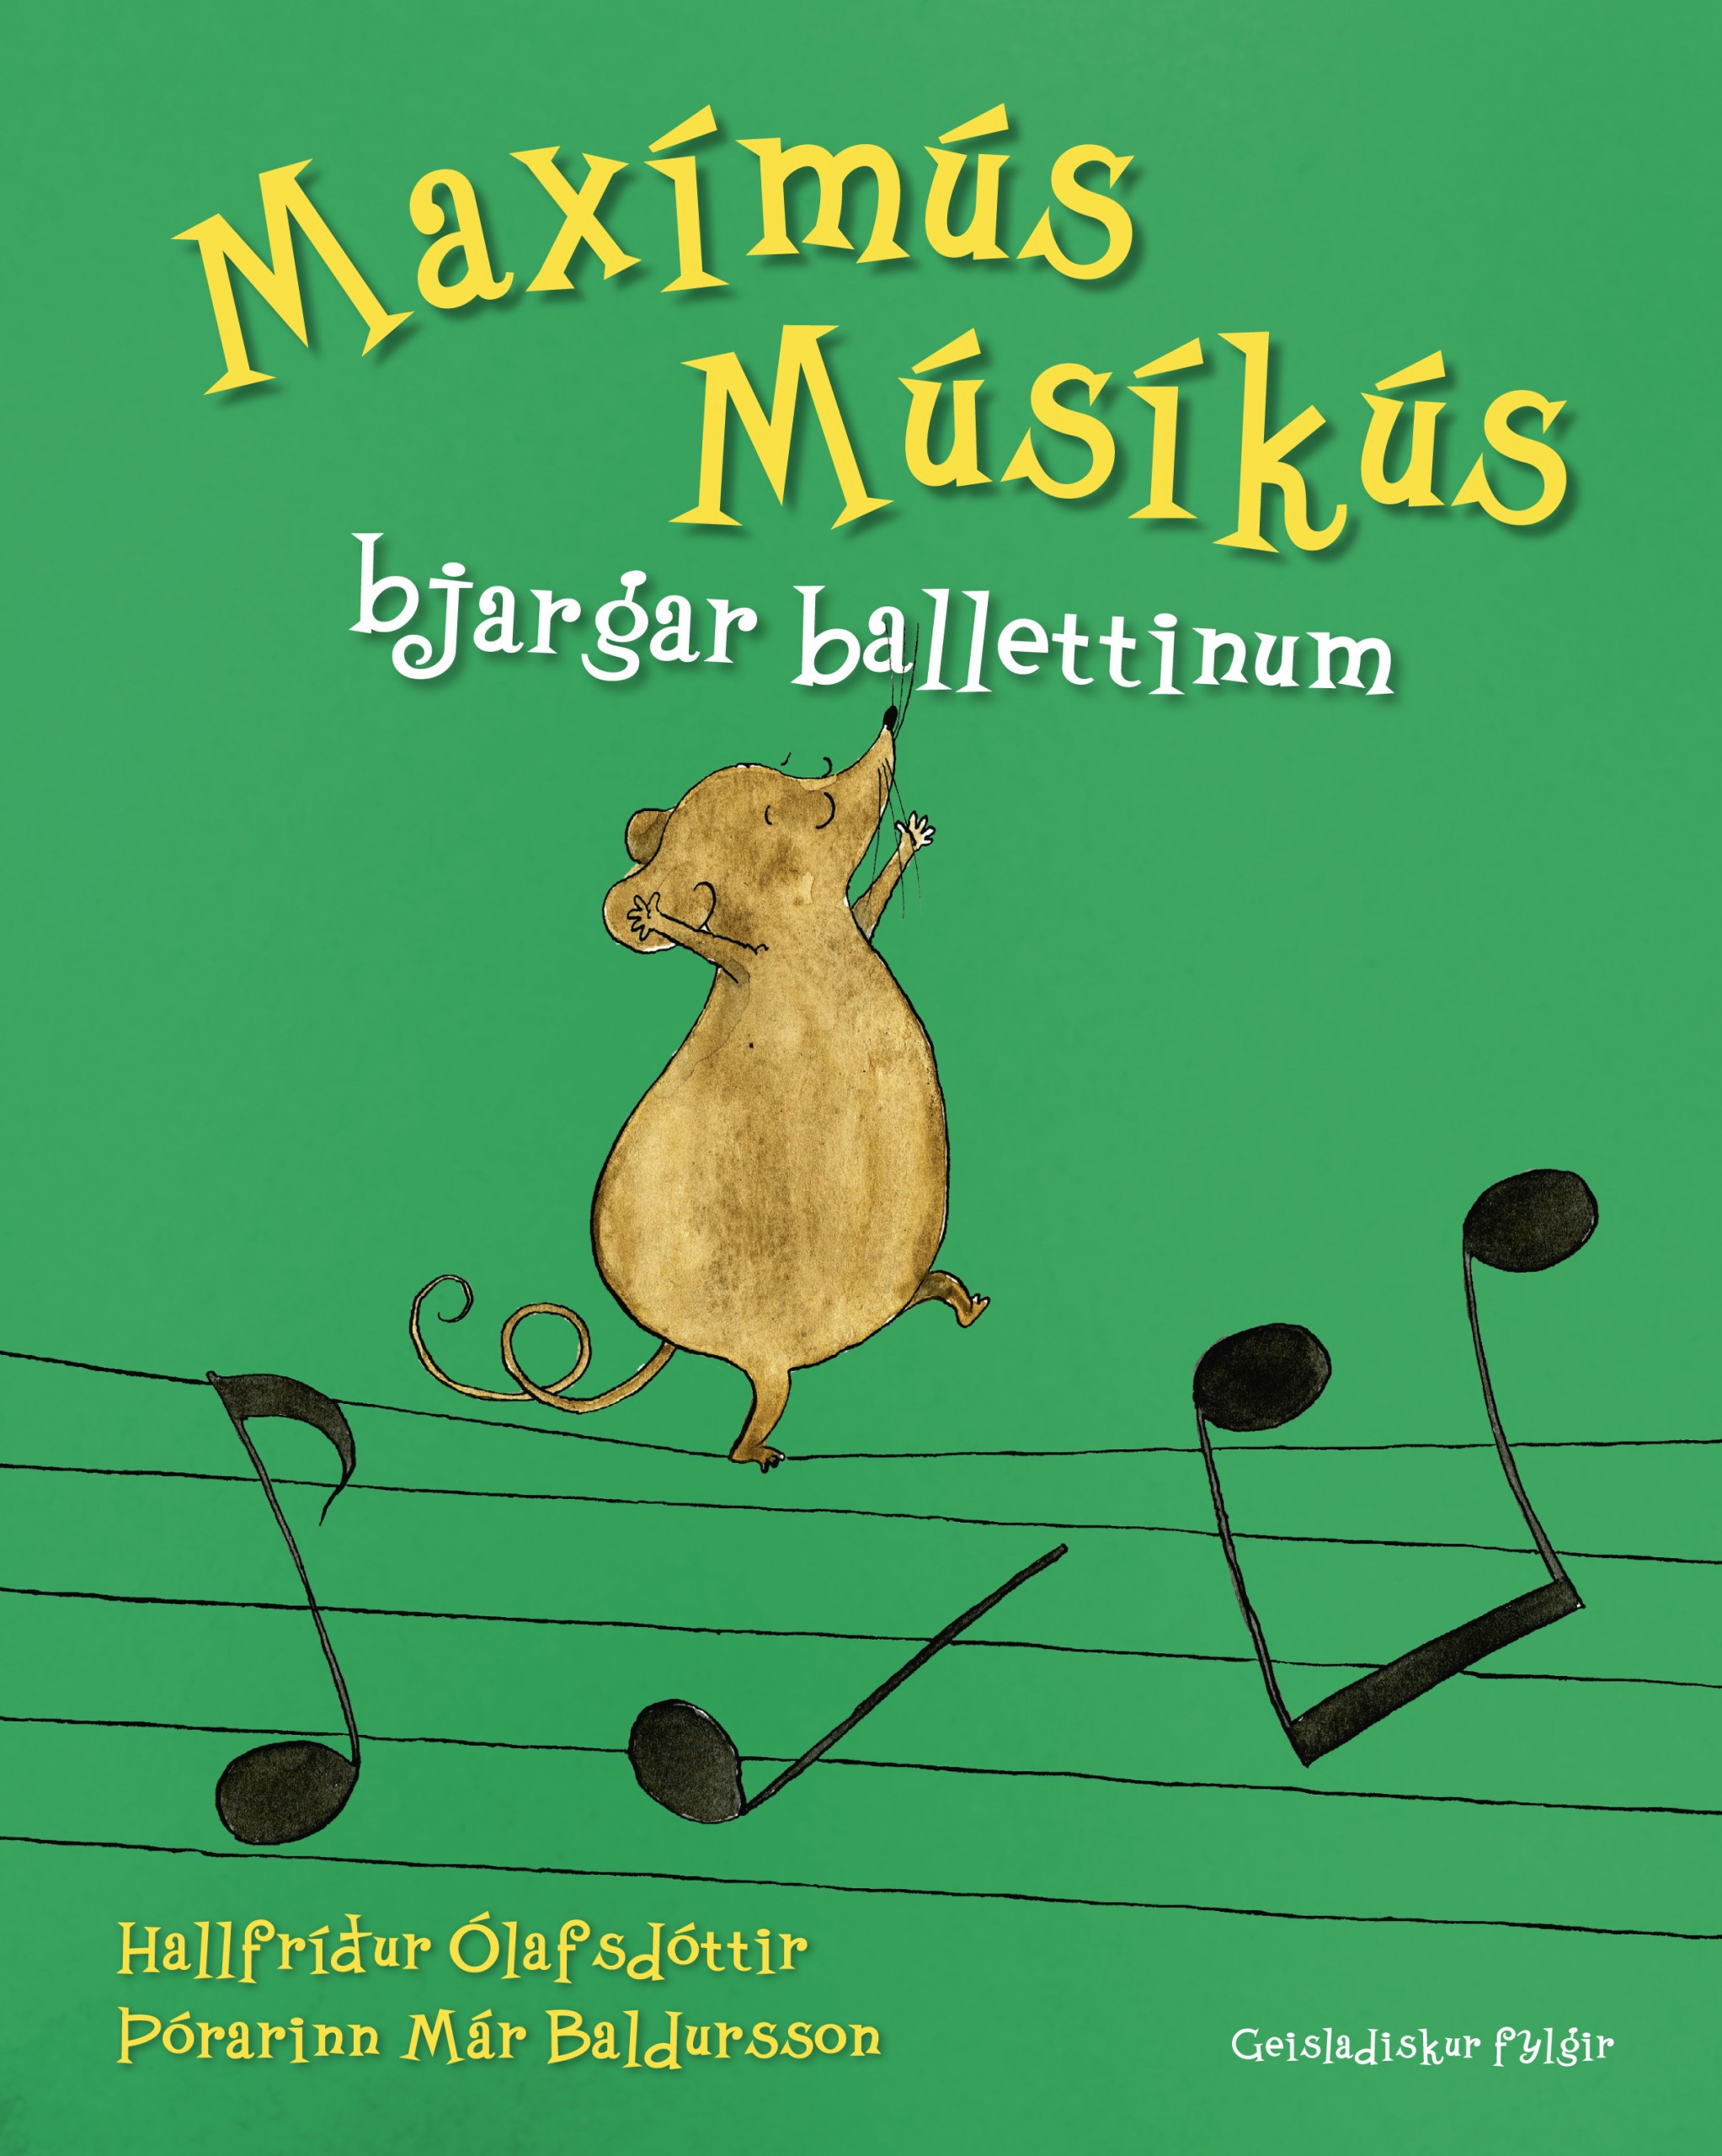 Maximus Musicus Visits the Orchestra (2008)